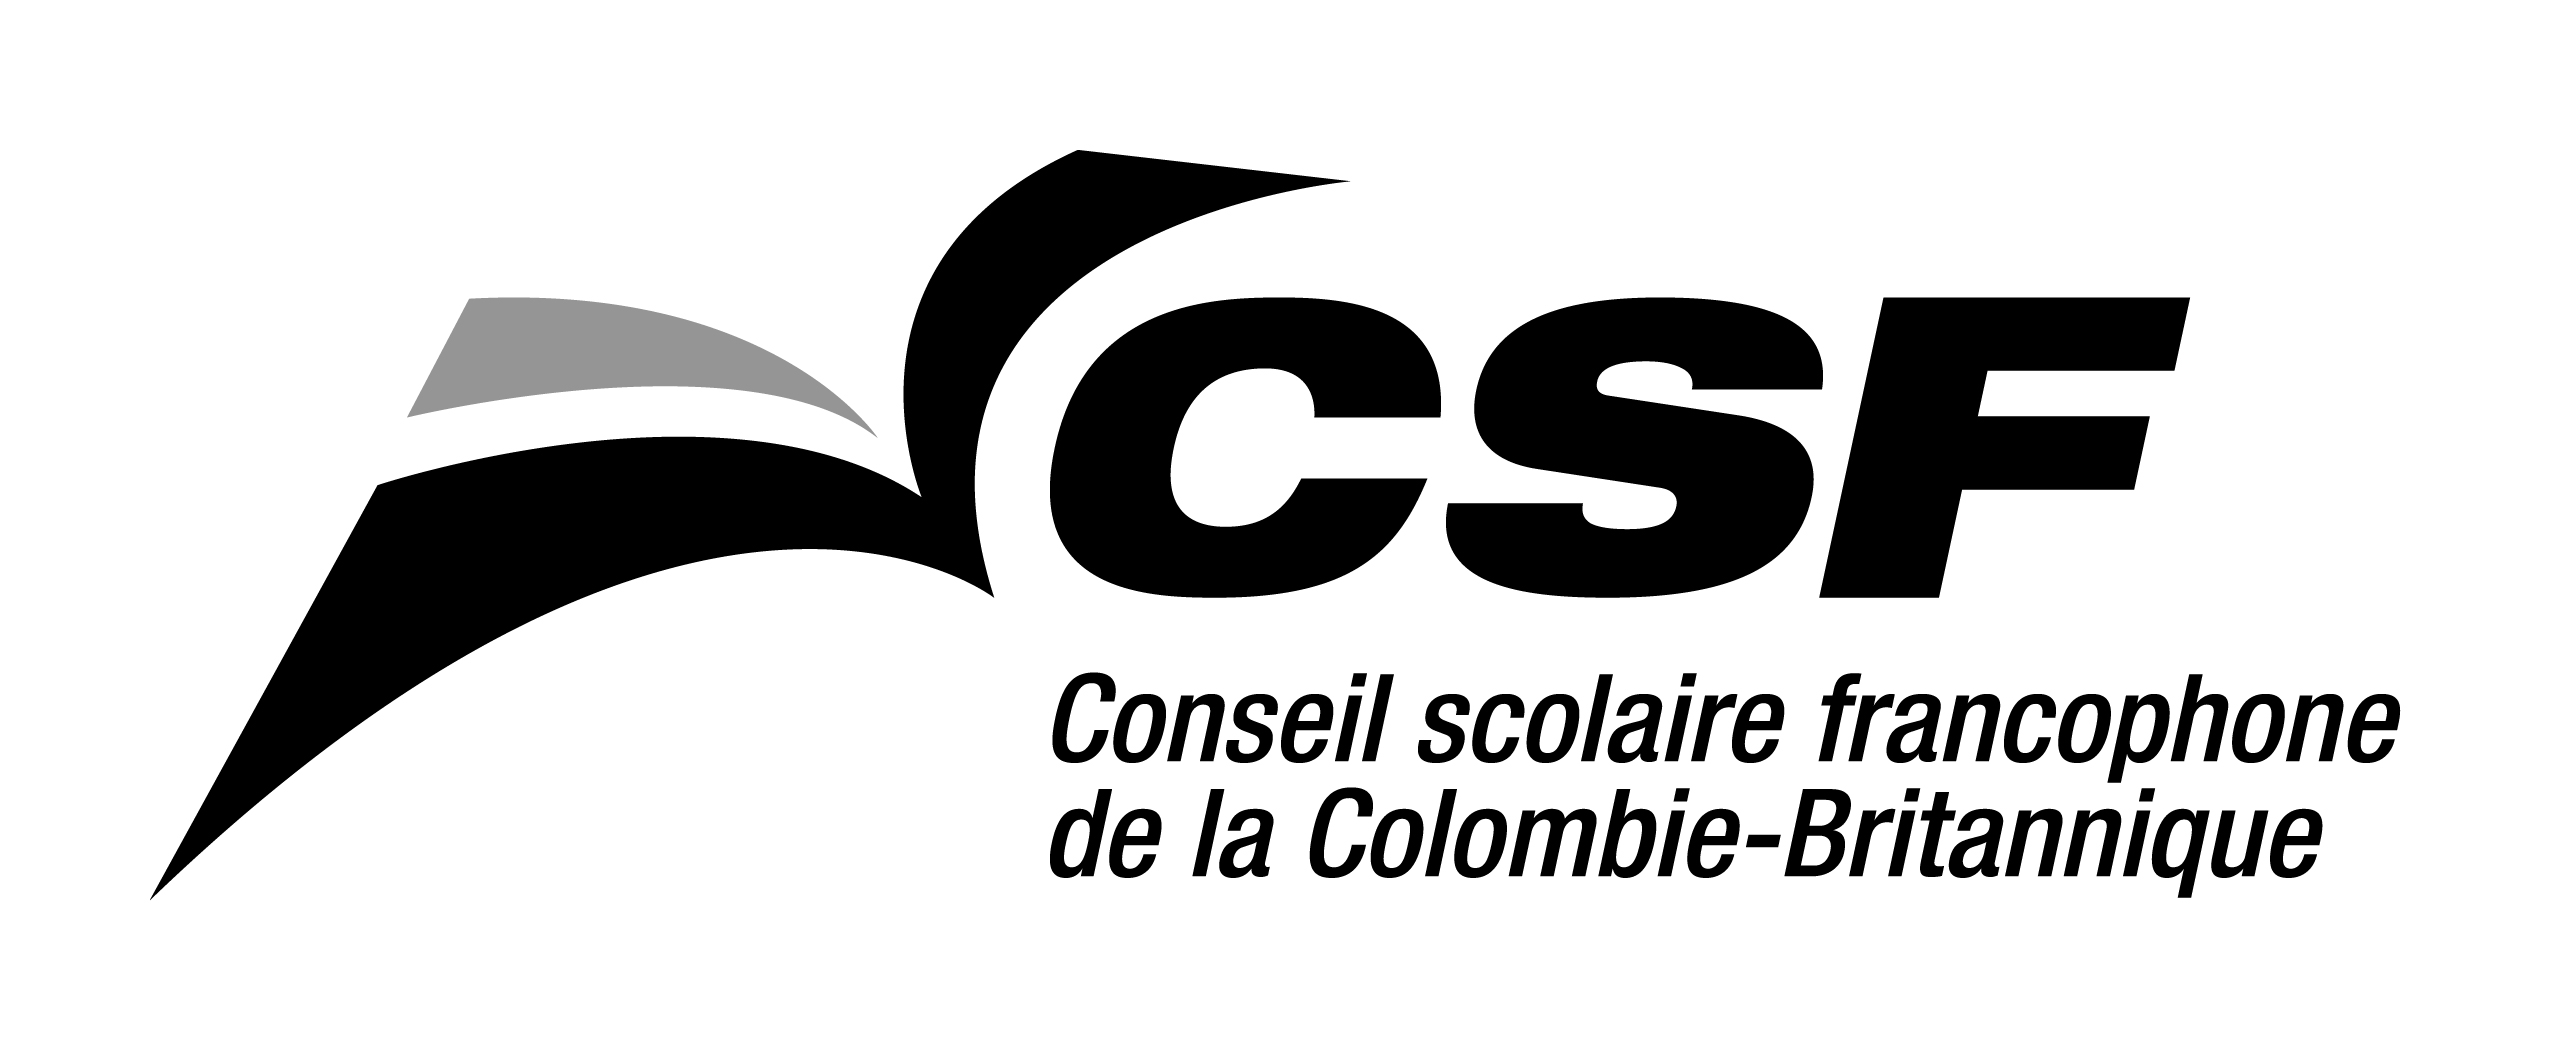 csf_logo_nb_pos